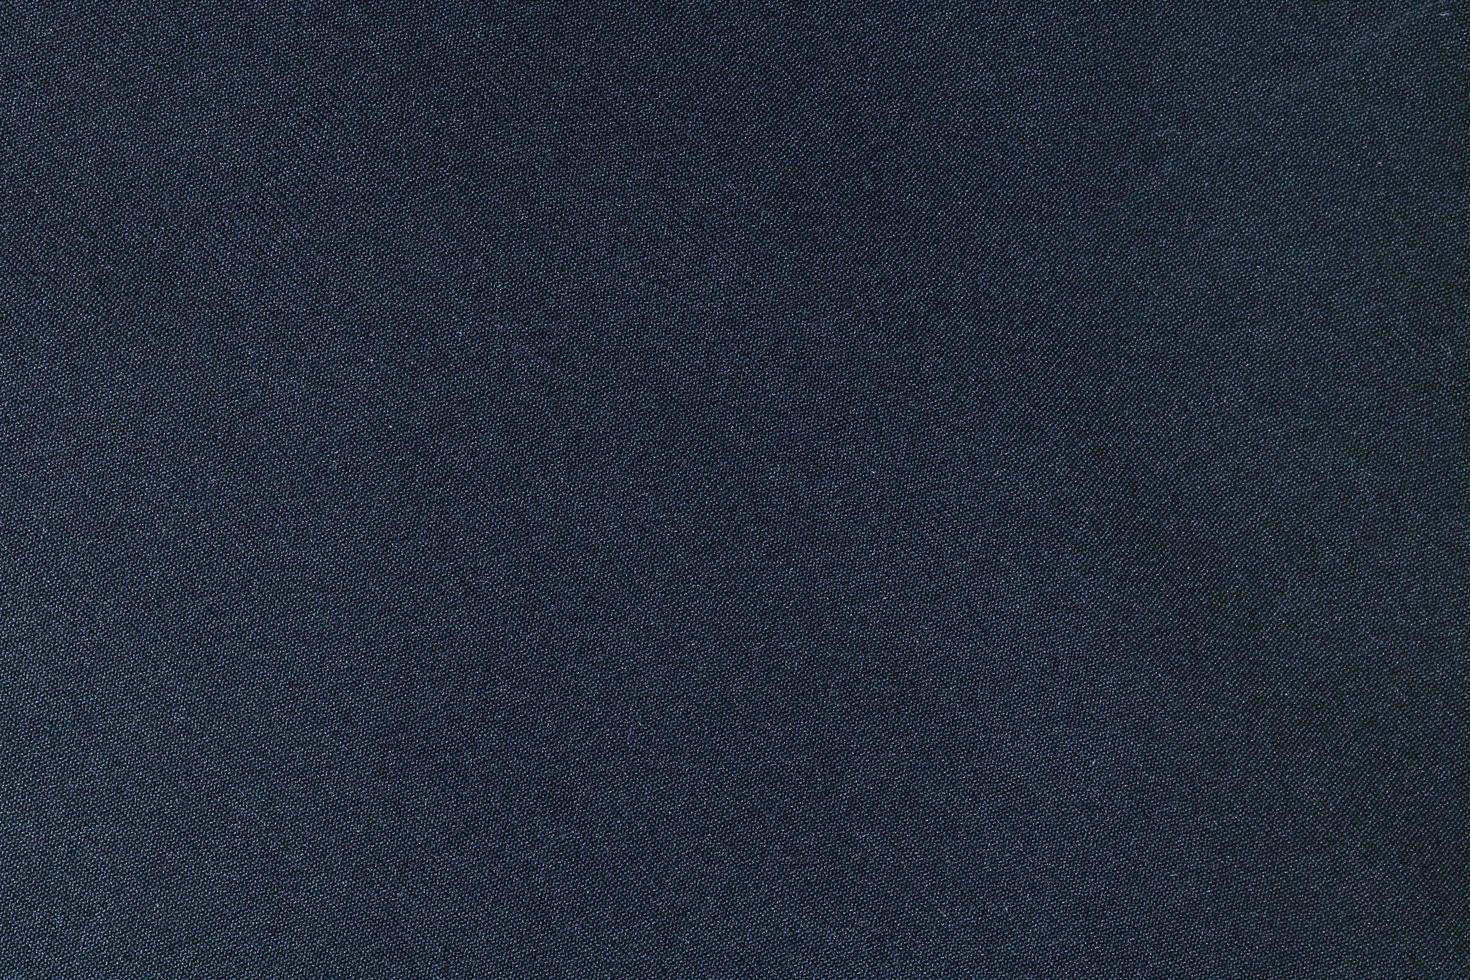 Close-up of dark fabric texture photo